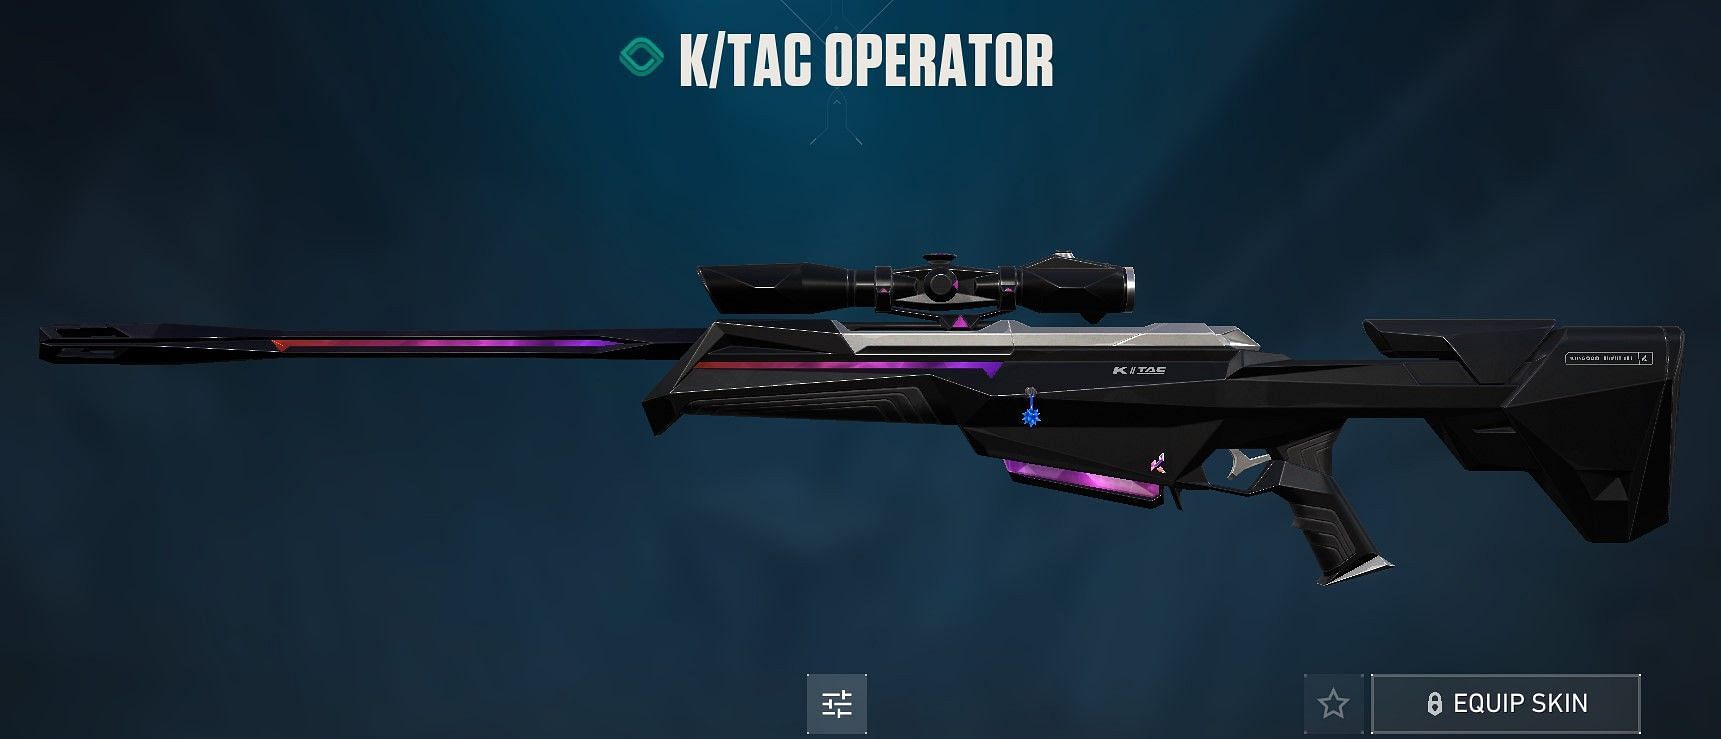 K/Tac Operator (Image via Riot Games)